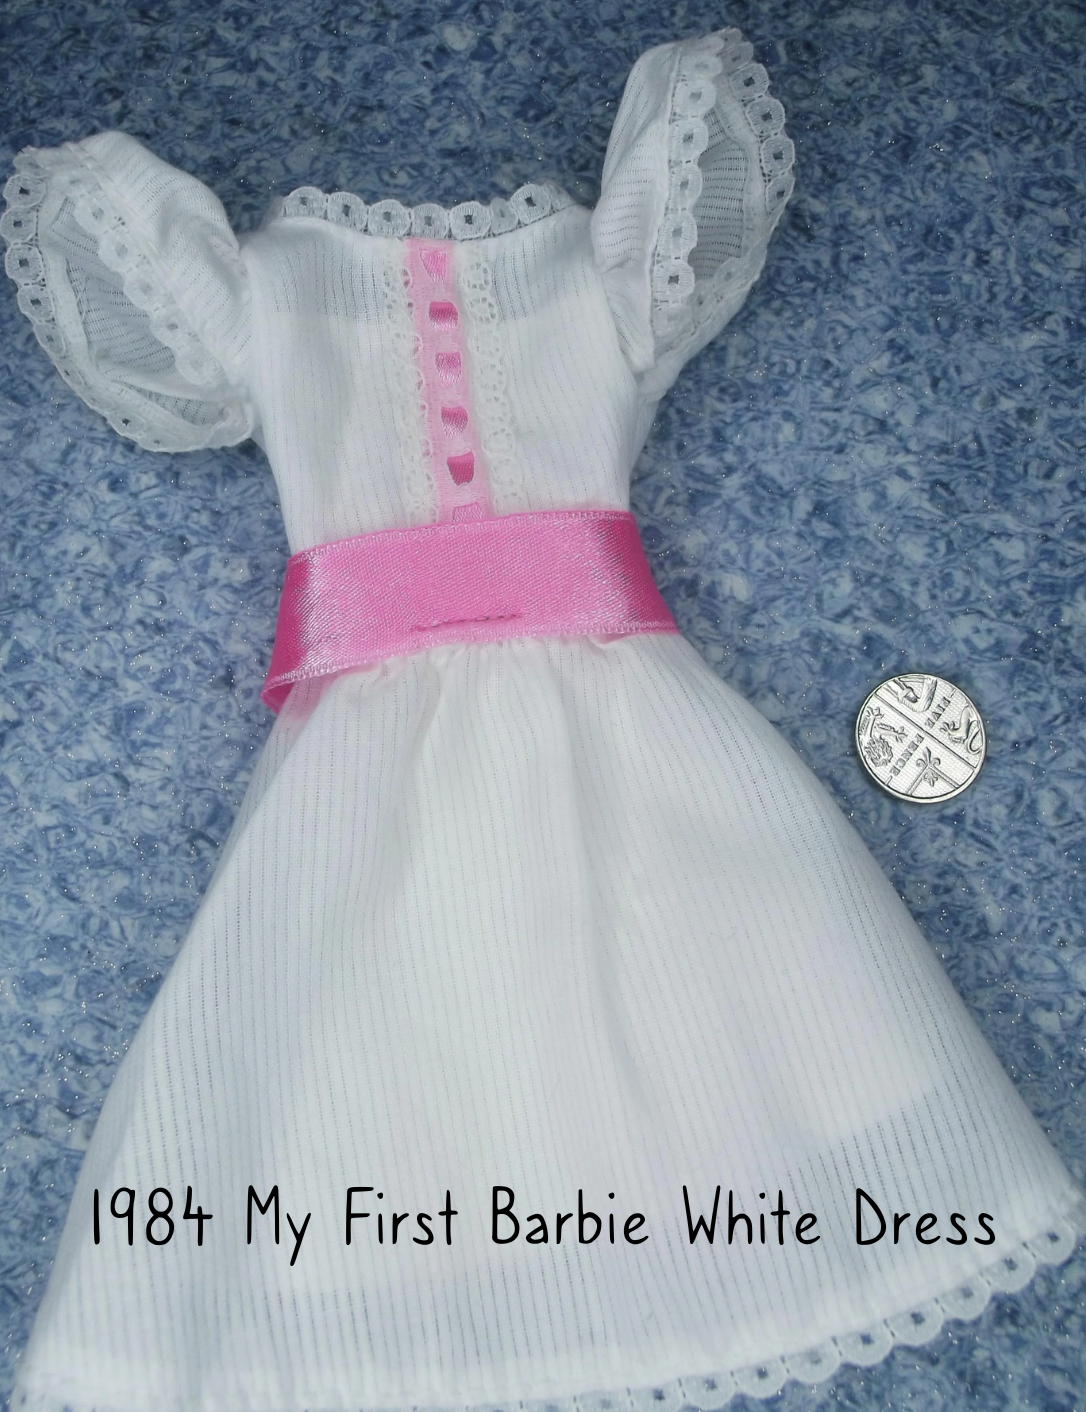 1984 My First Barbie White Dress